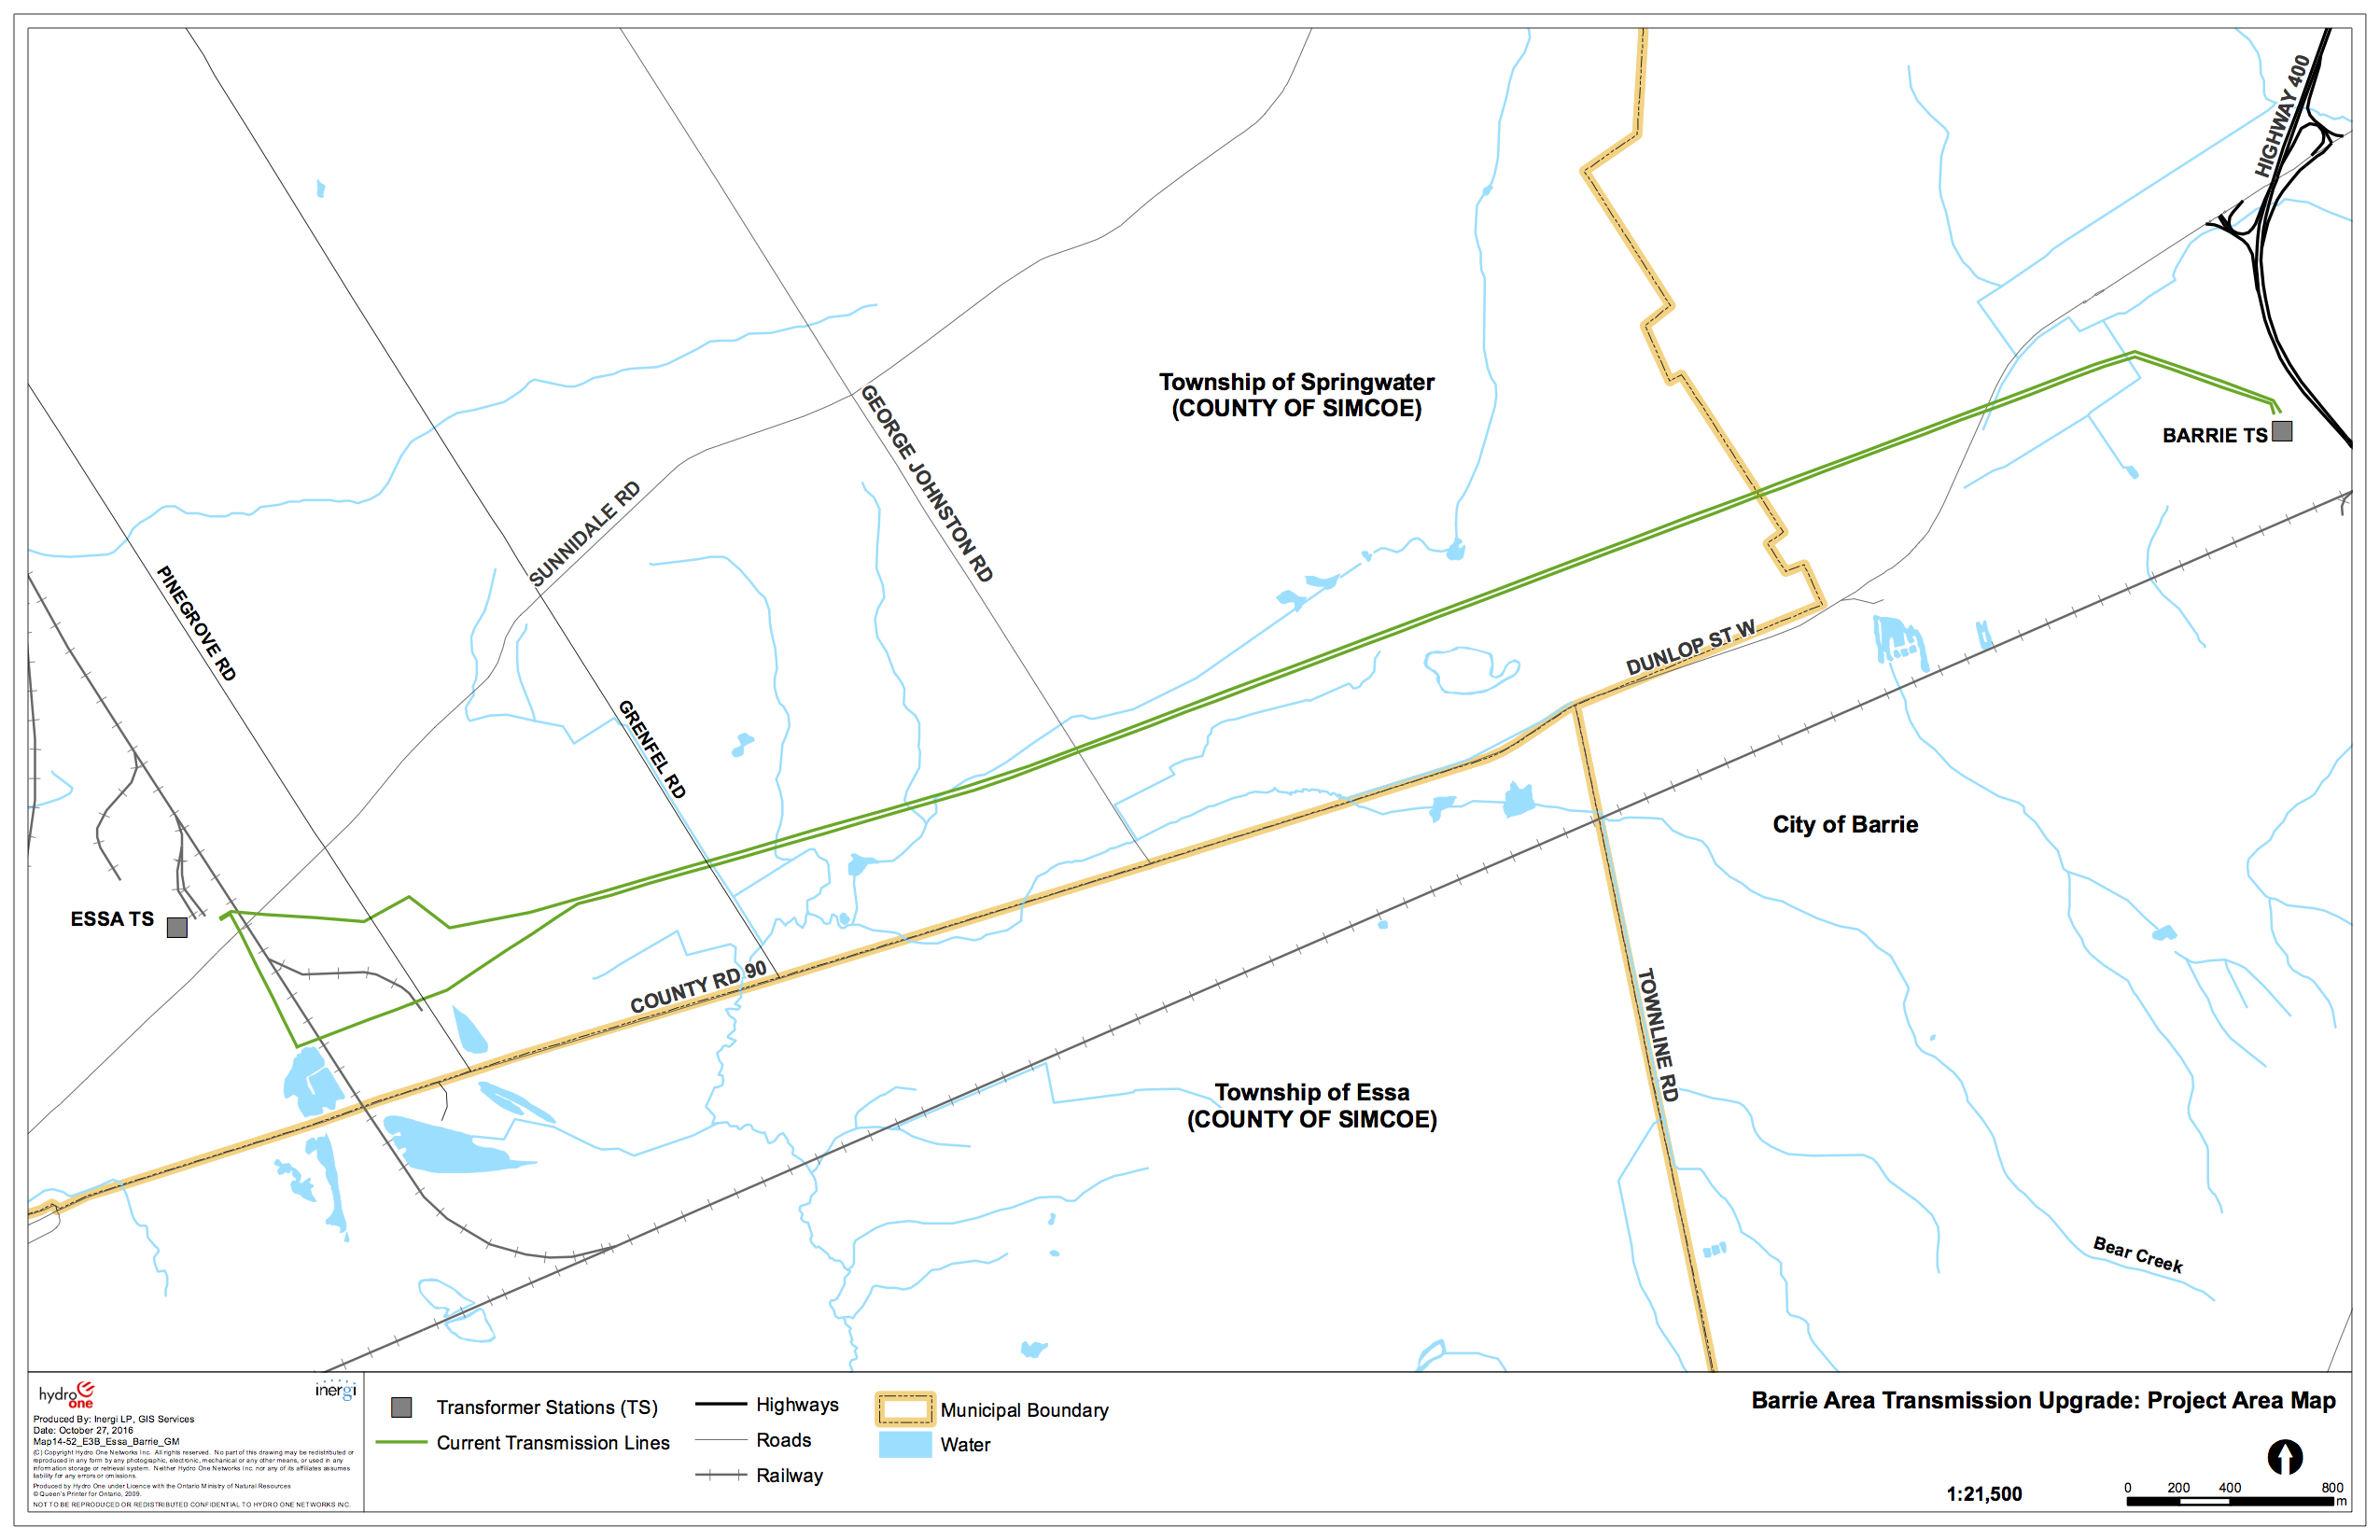 Project Area Maps: Transmission Corridor